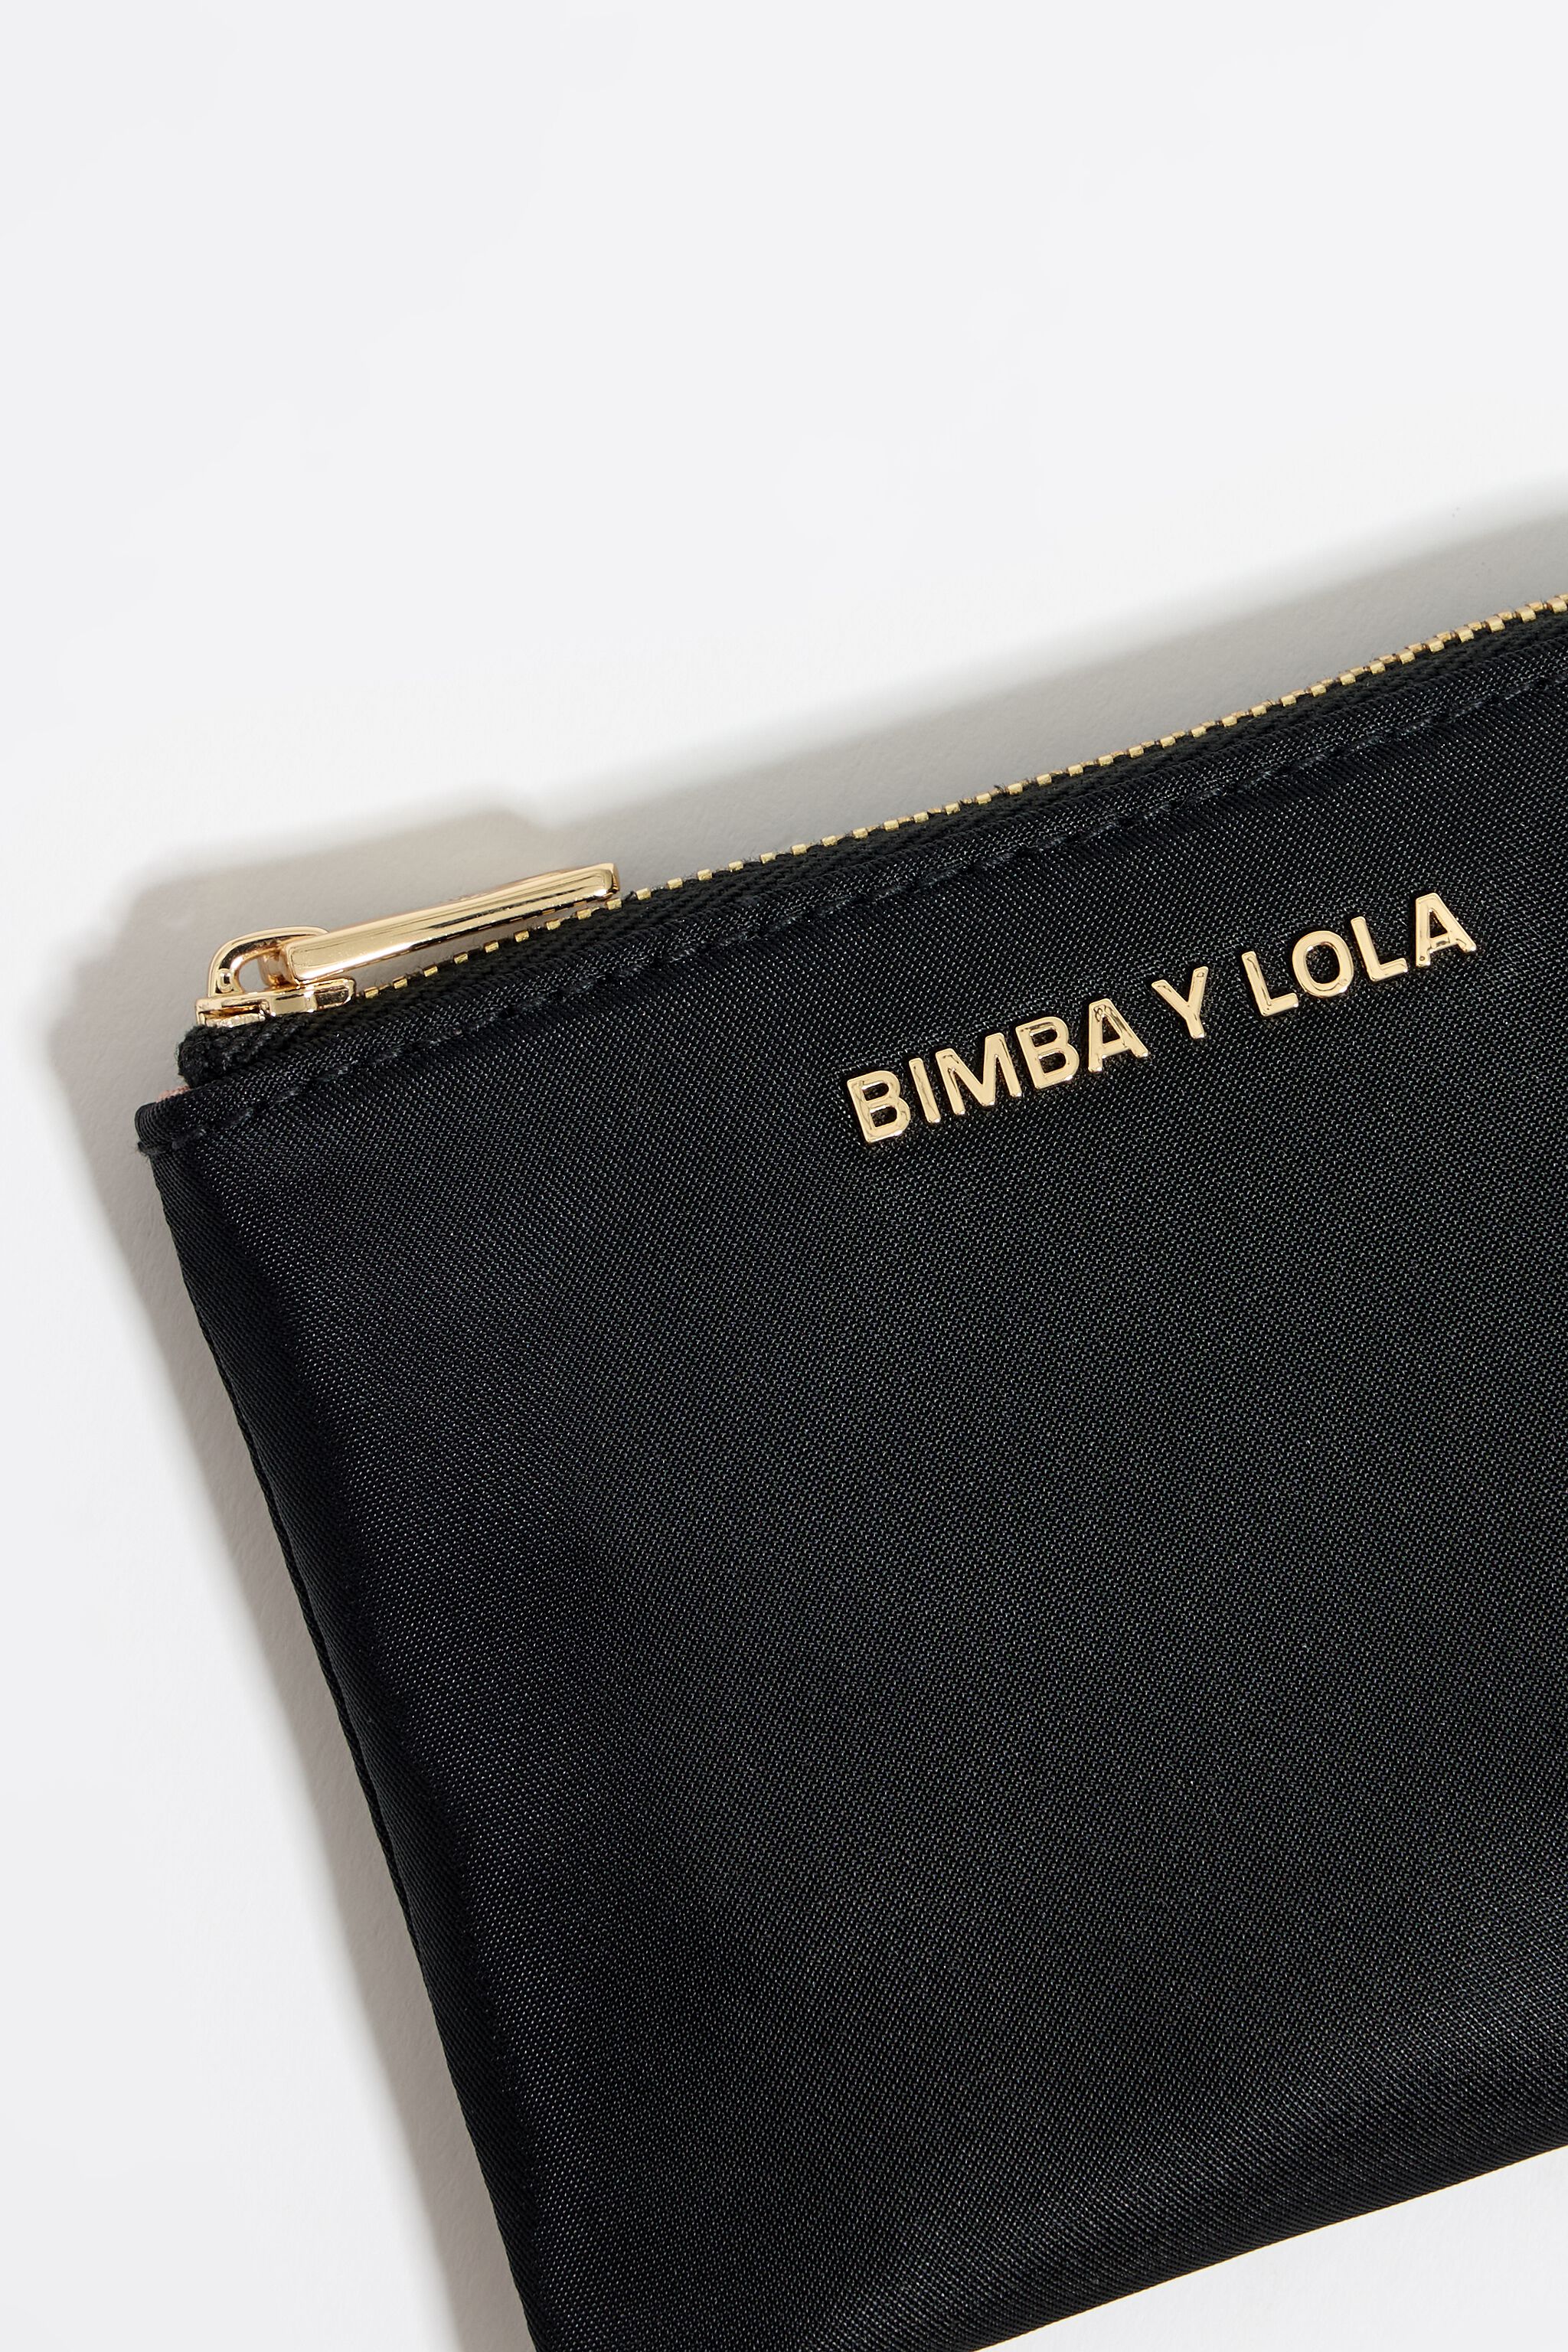 BIMBA Y LOLA #THISISTROPICANA SS15 www.bimbaylola.com | 가방, 제품, 제품 디자인